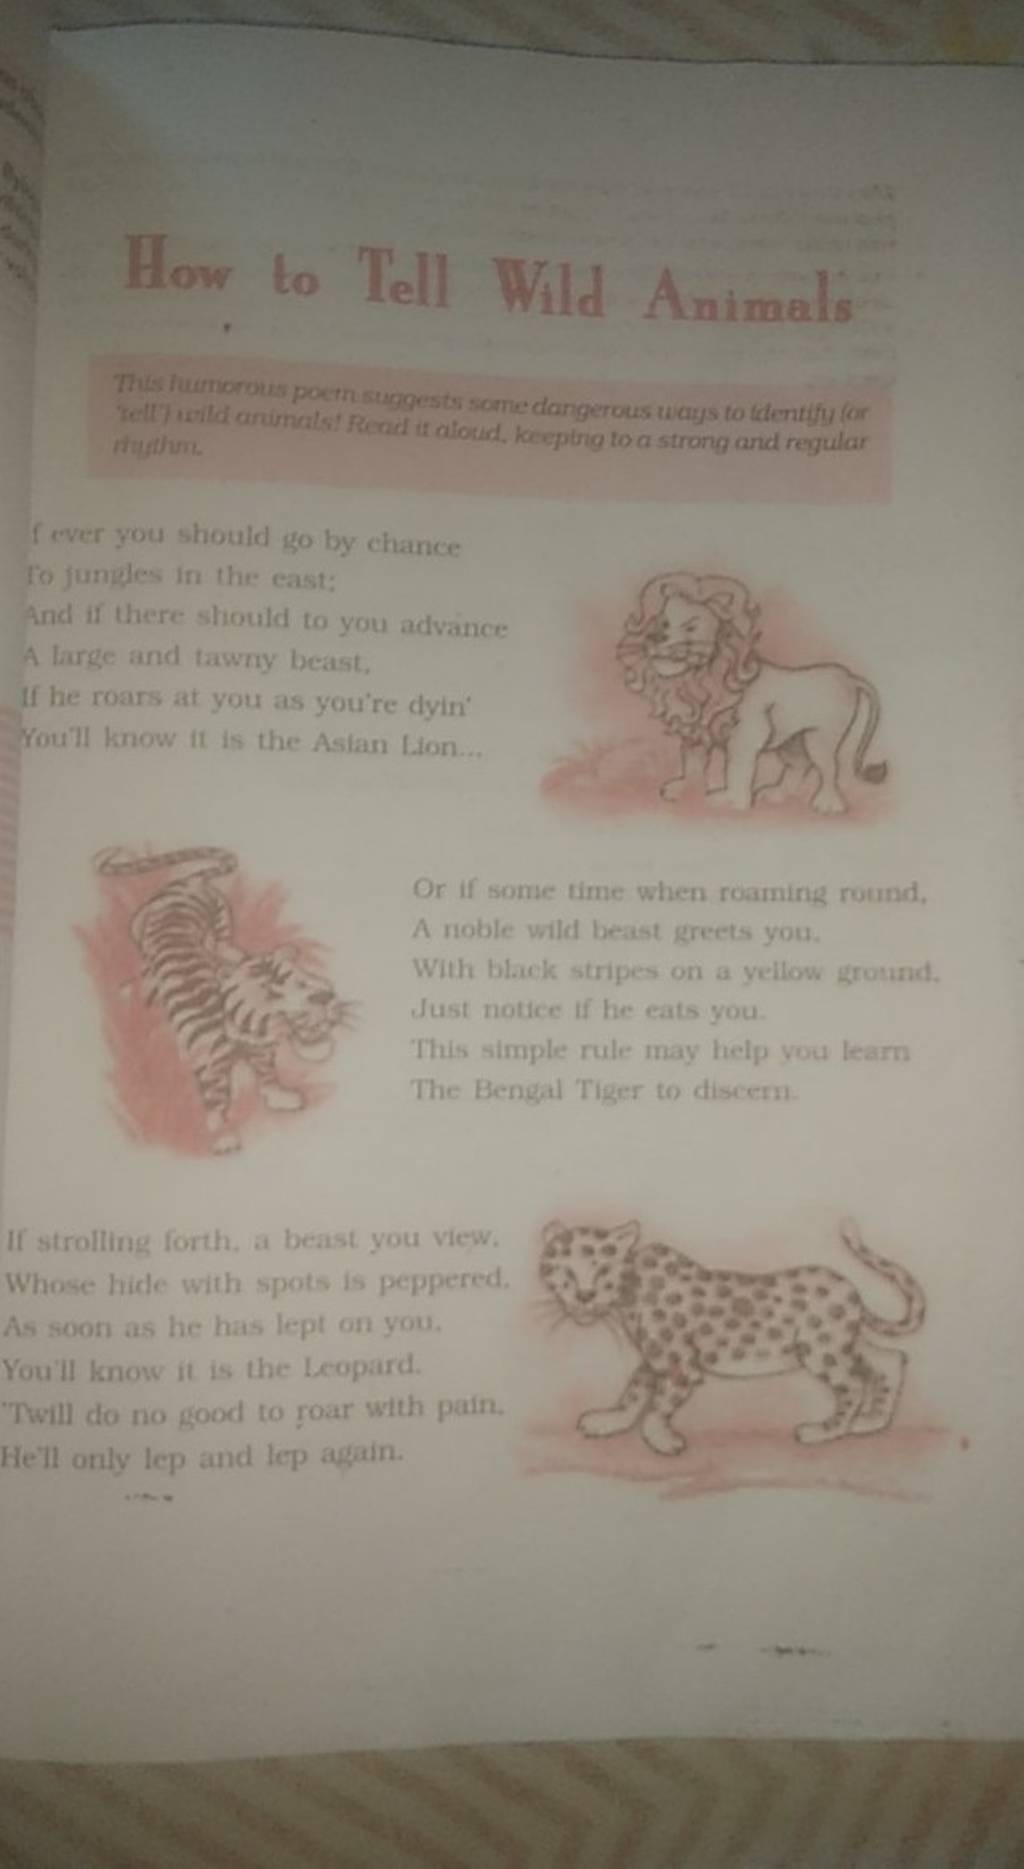 How to Tell Wild Animals This fuimoroks poem suggests some dangerous ways..